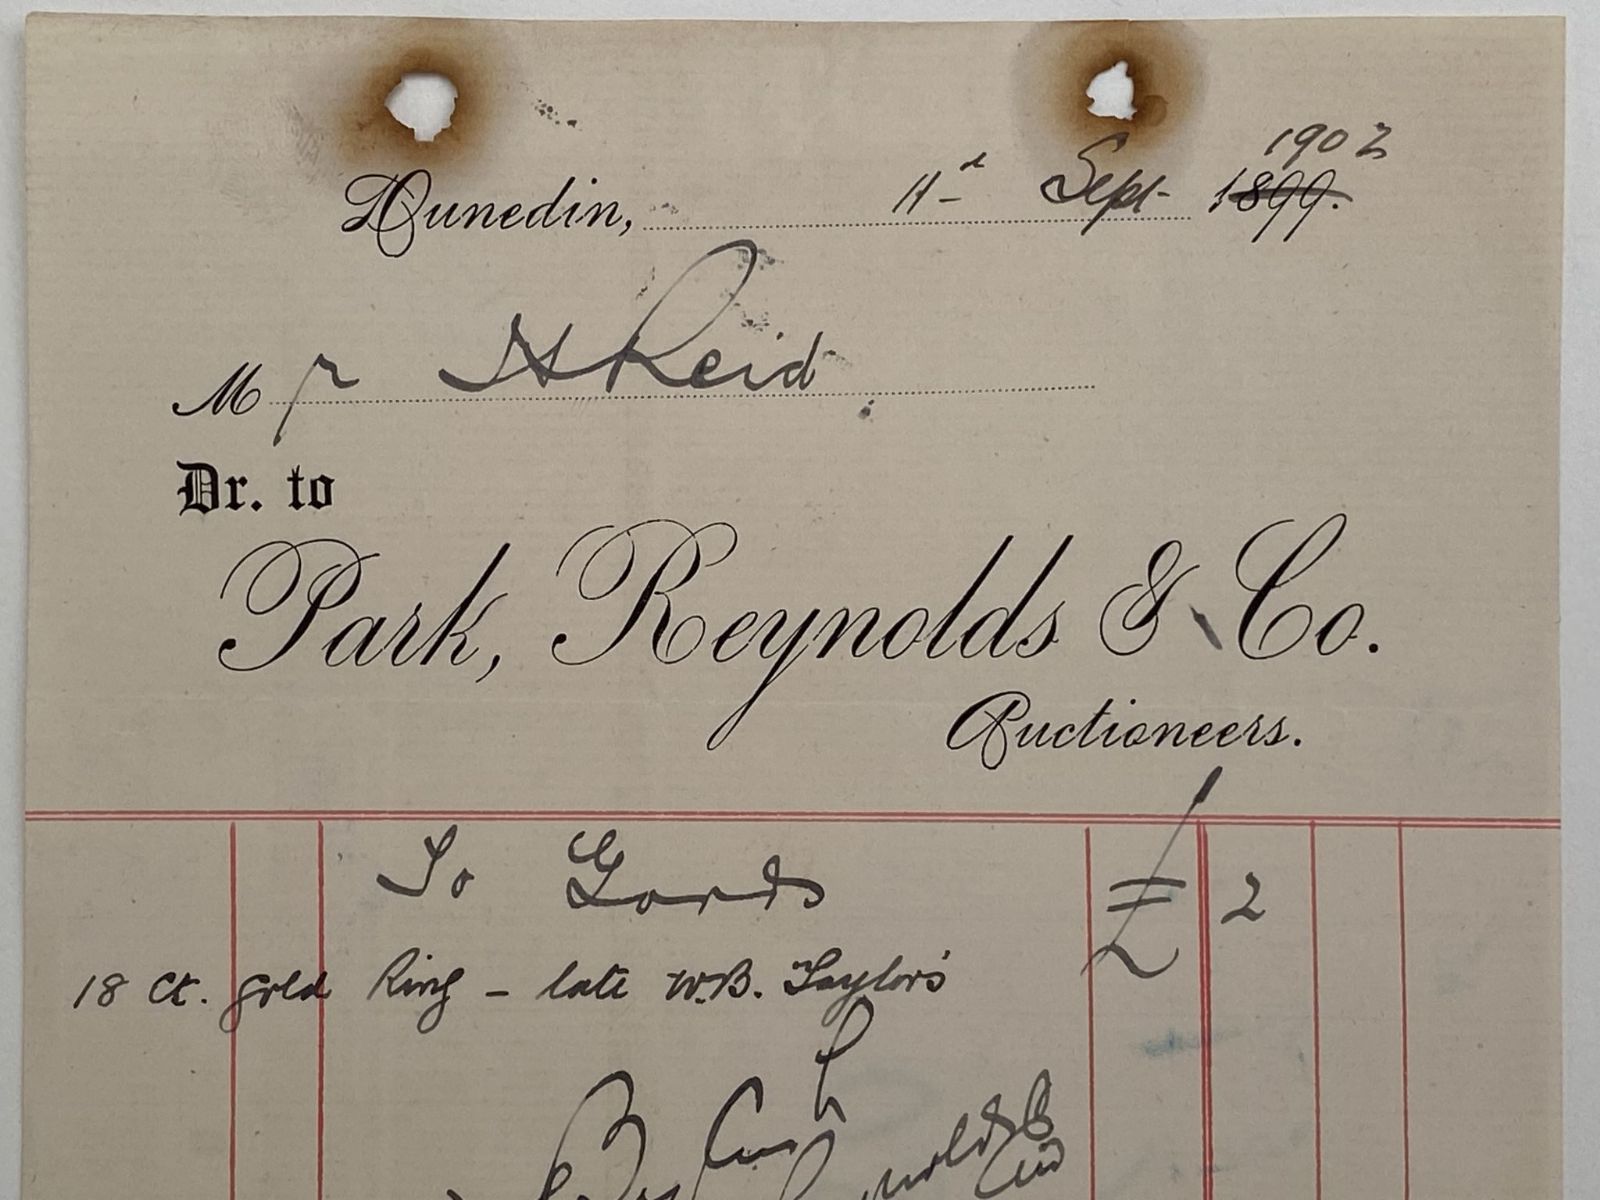 ANTIQUE INVOICE / RECEIPT: Park, Reynolds & Co. Auctioneers 1902